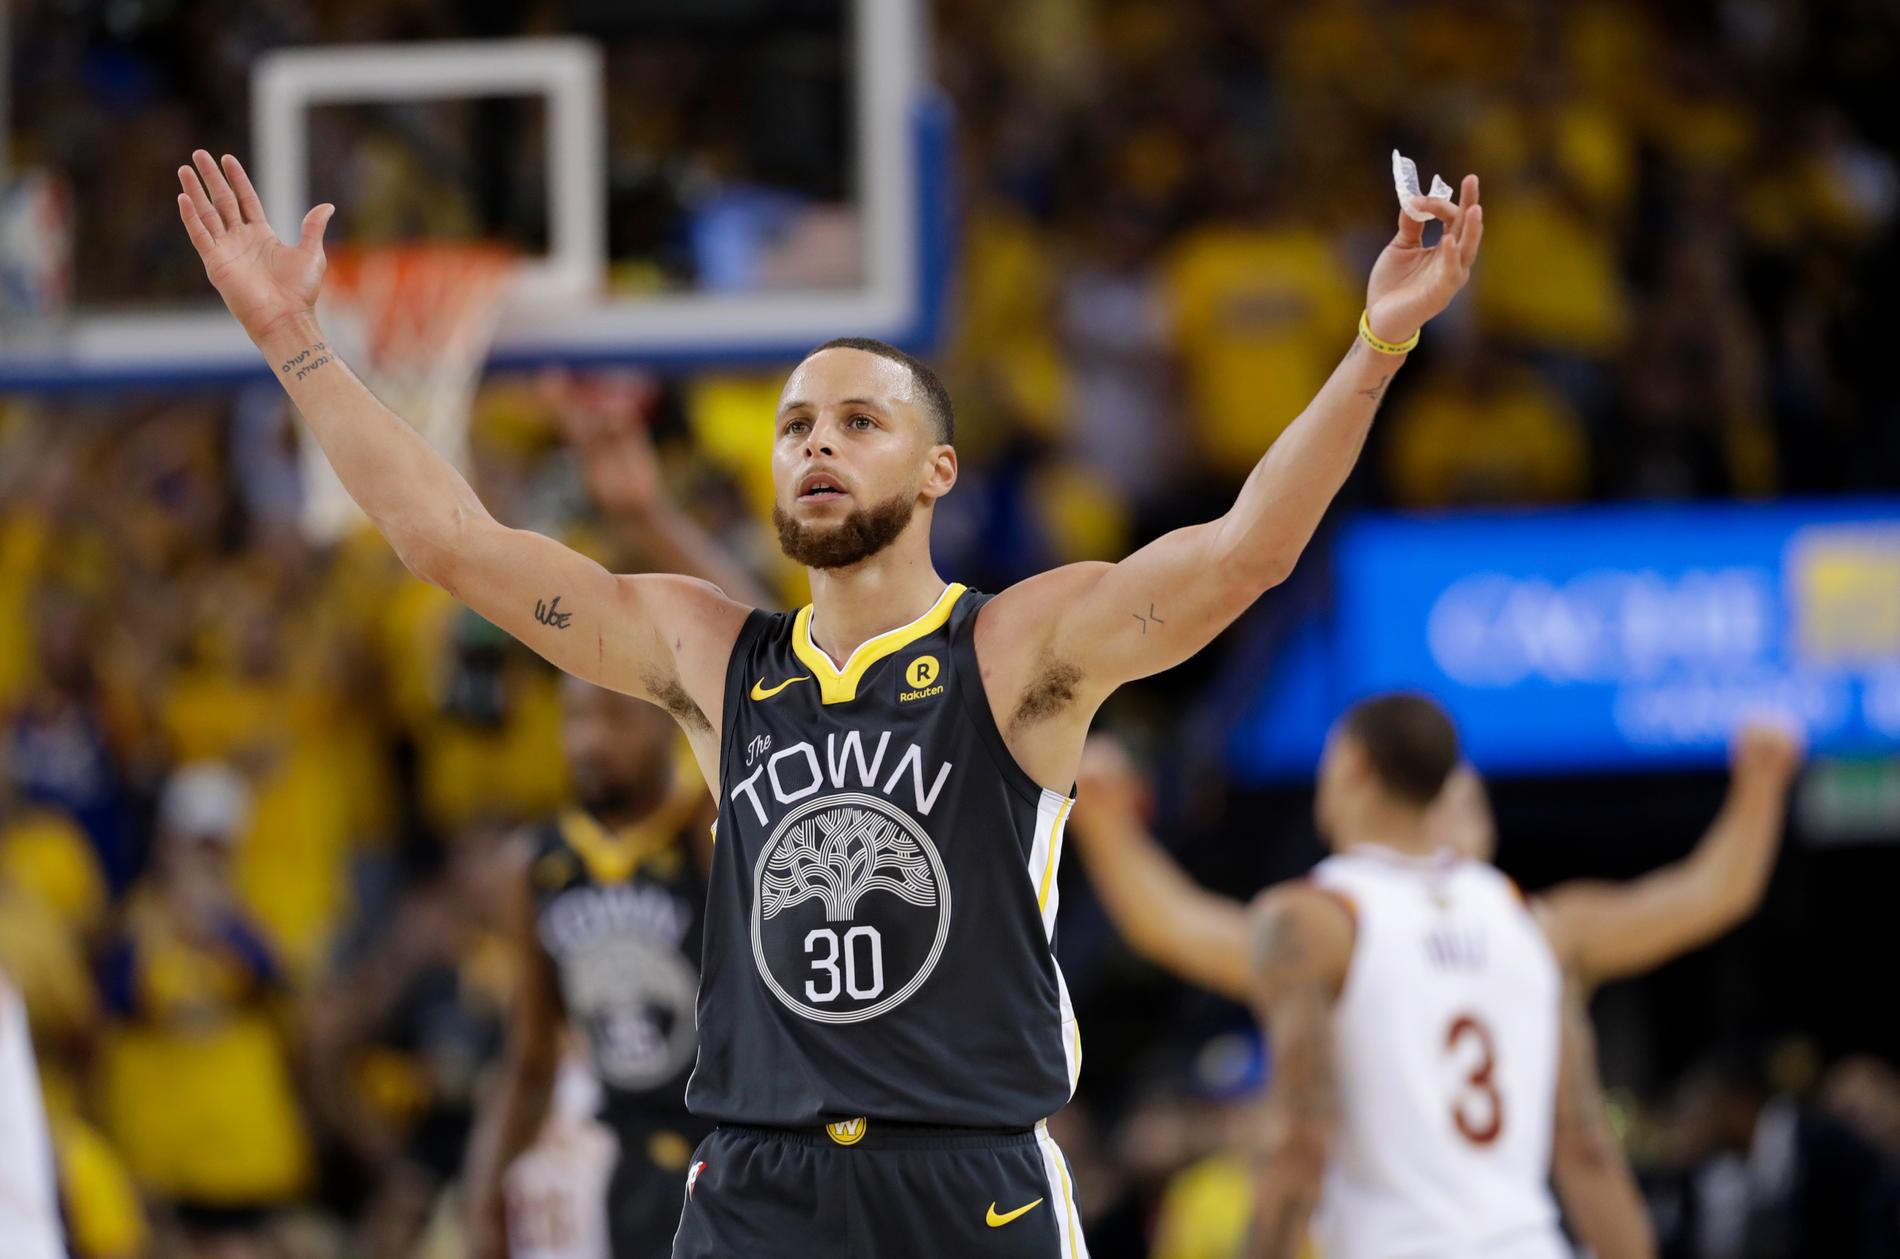 Golden State Warriors guard Stephen Curry.